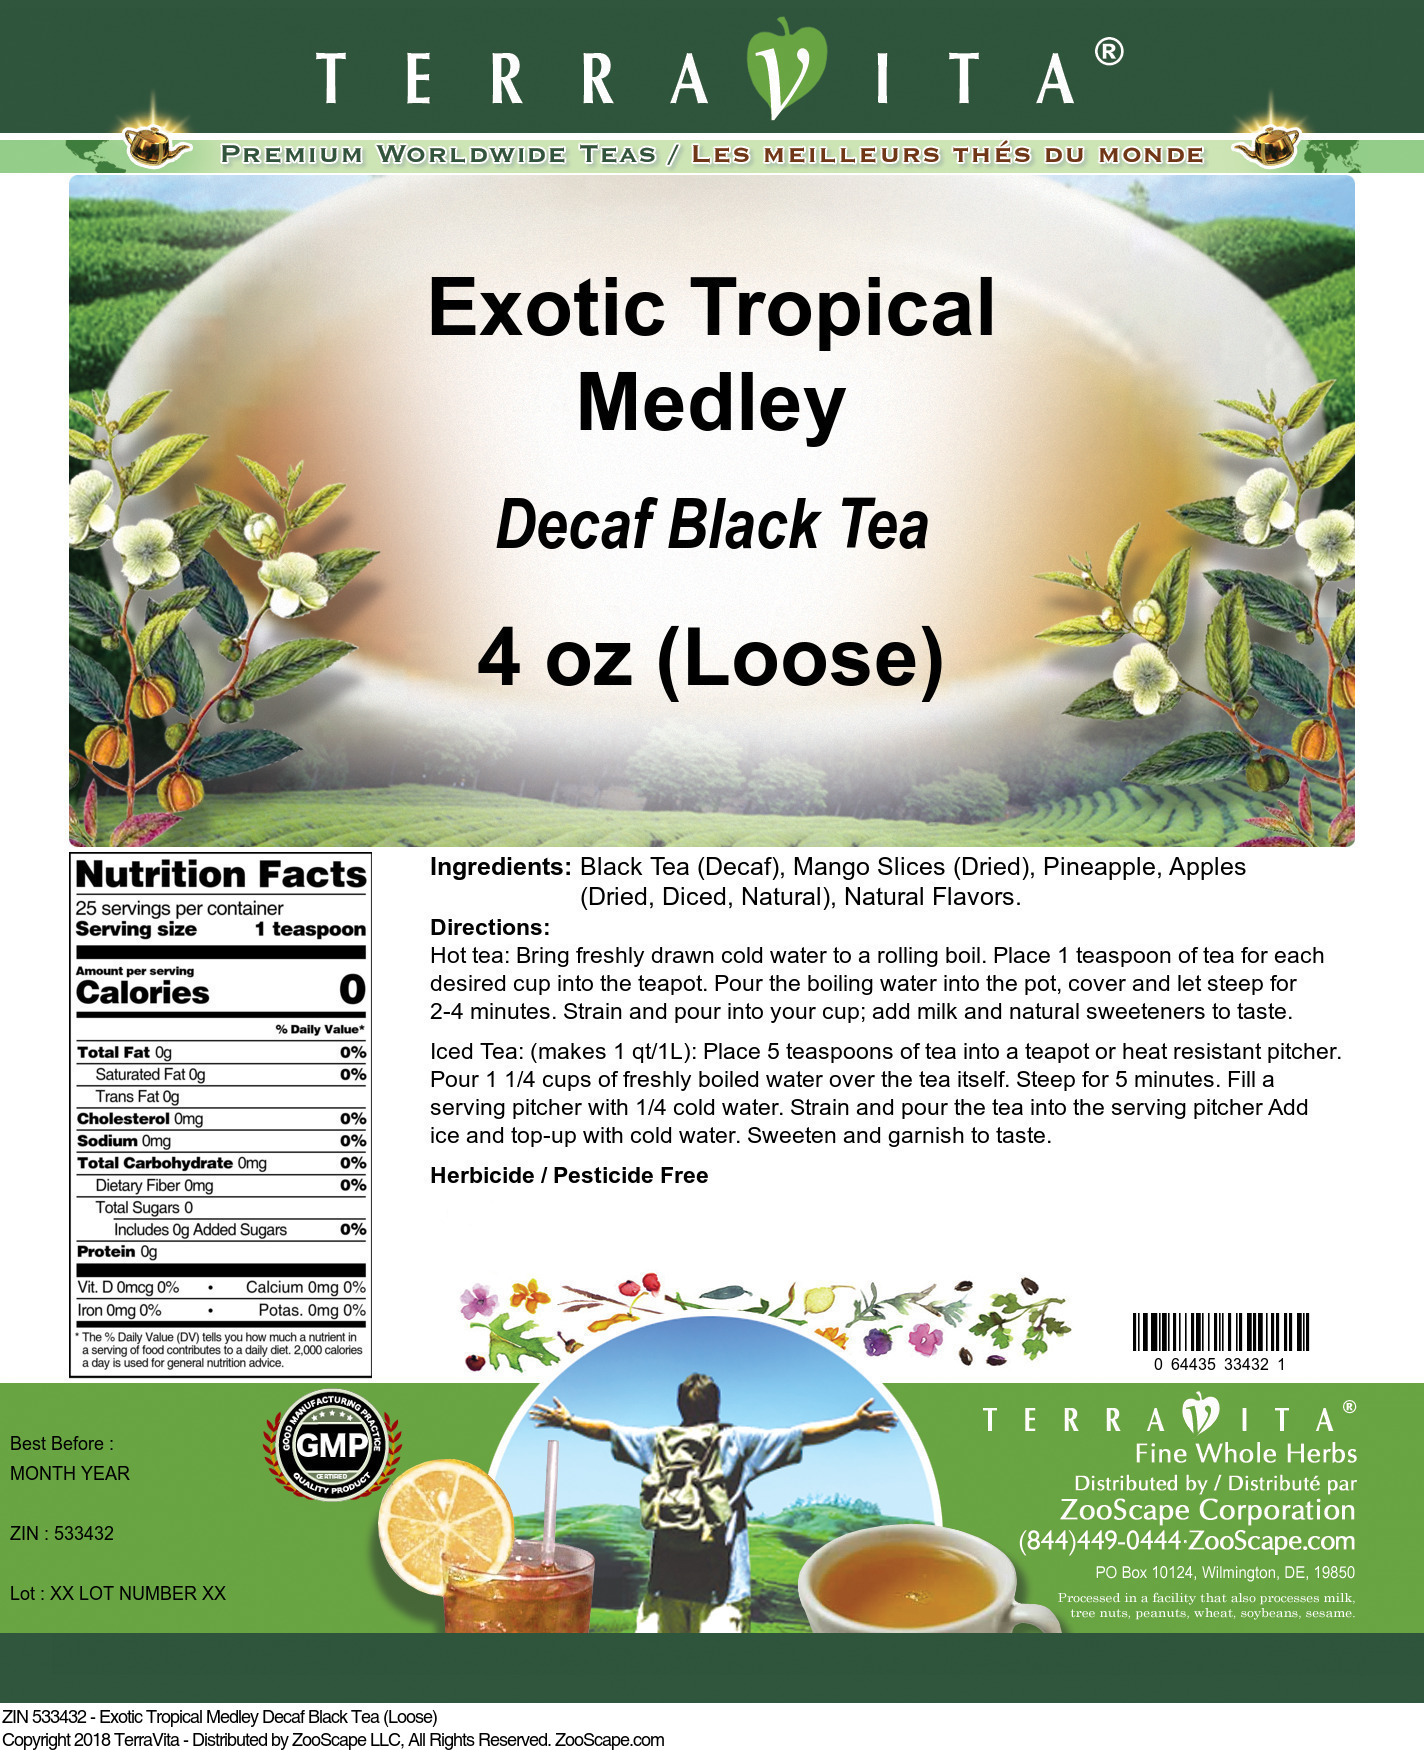 Exotic Tropical Medley Decaf Black Tea (Loose) - Label